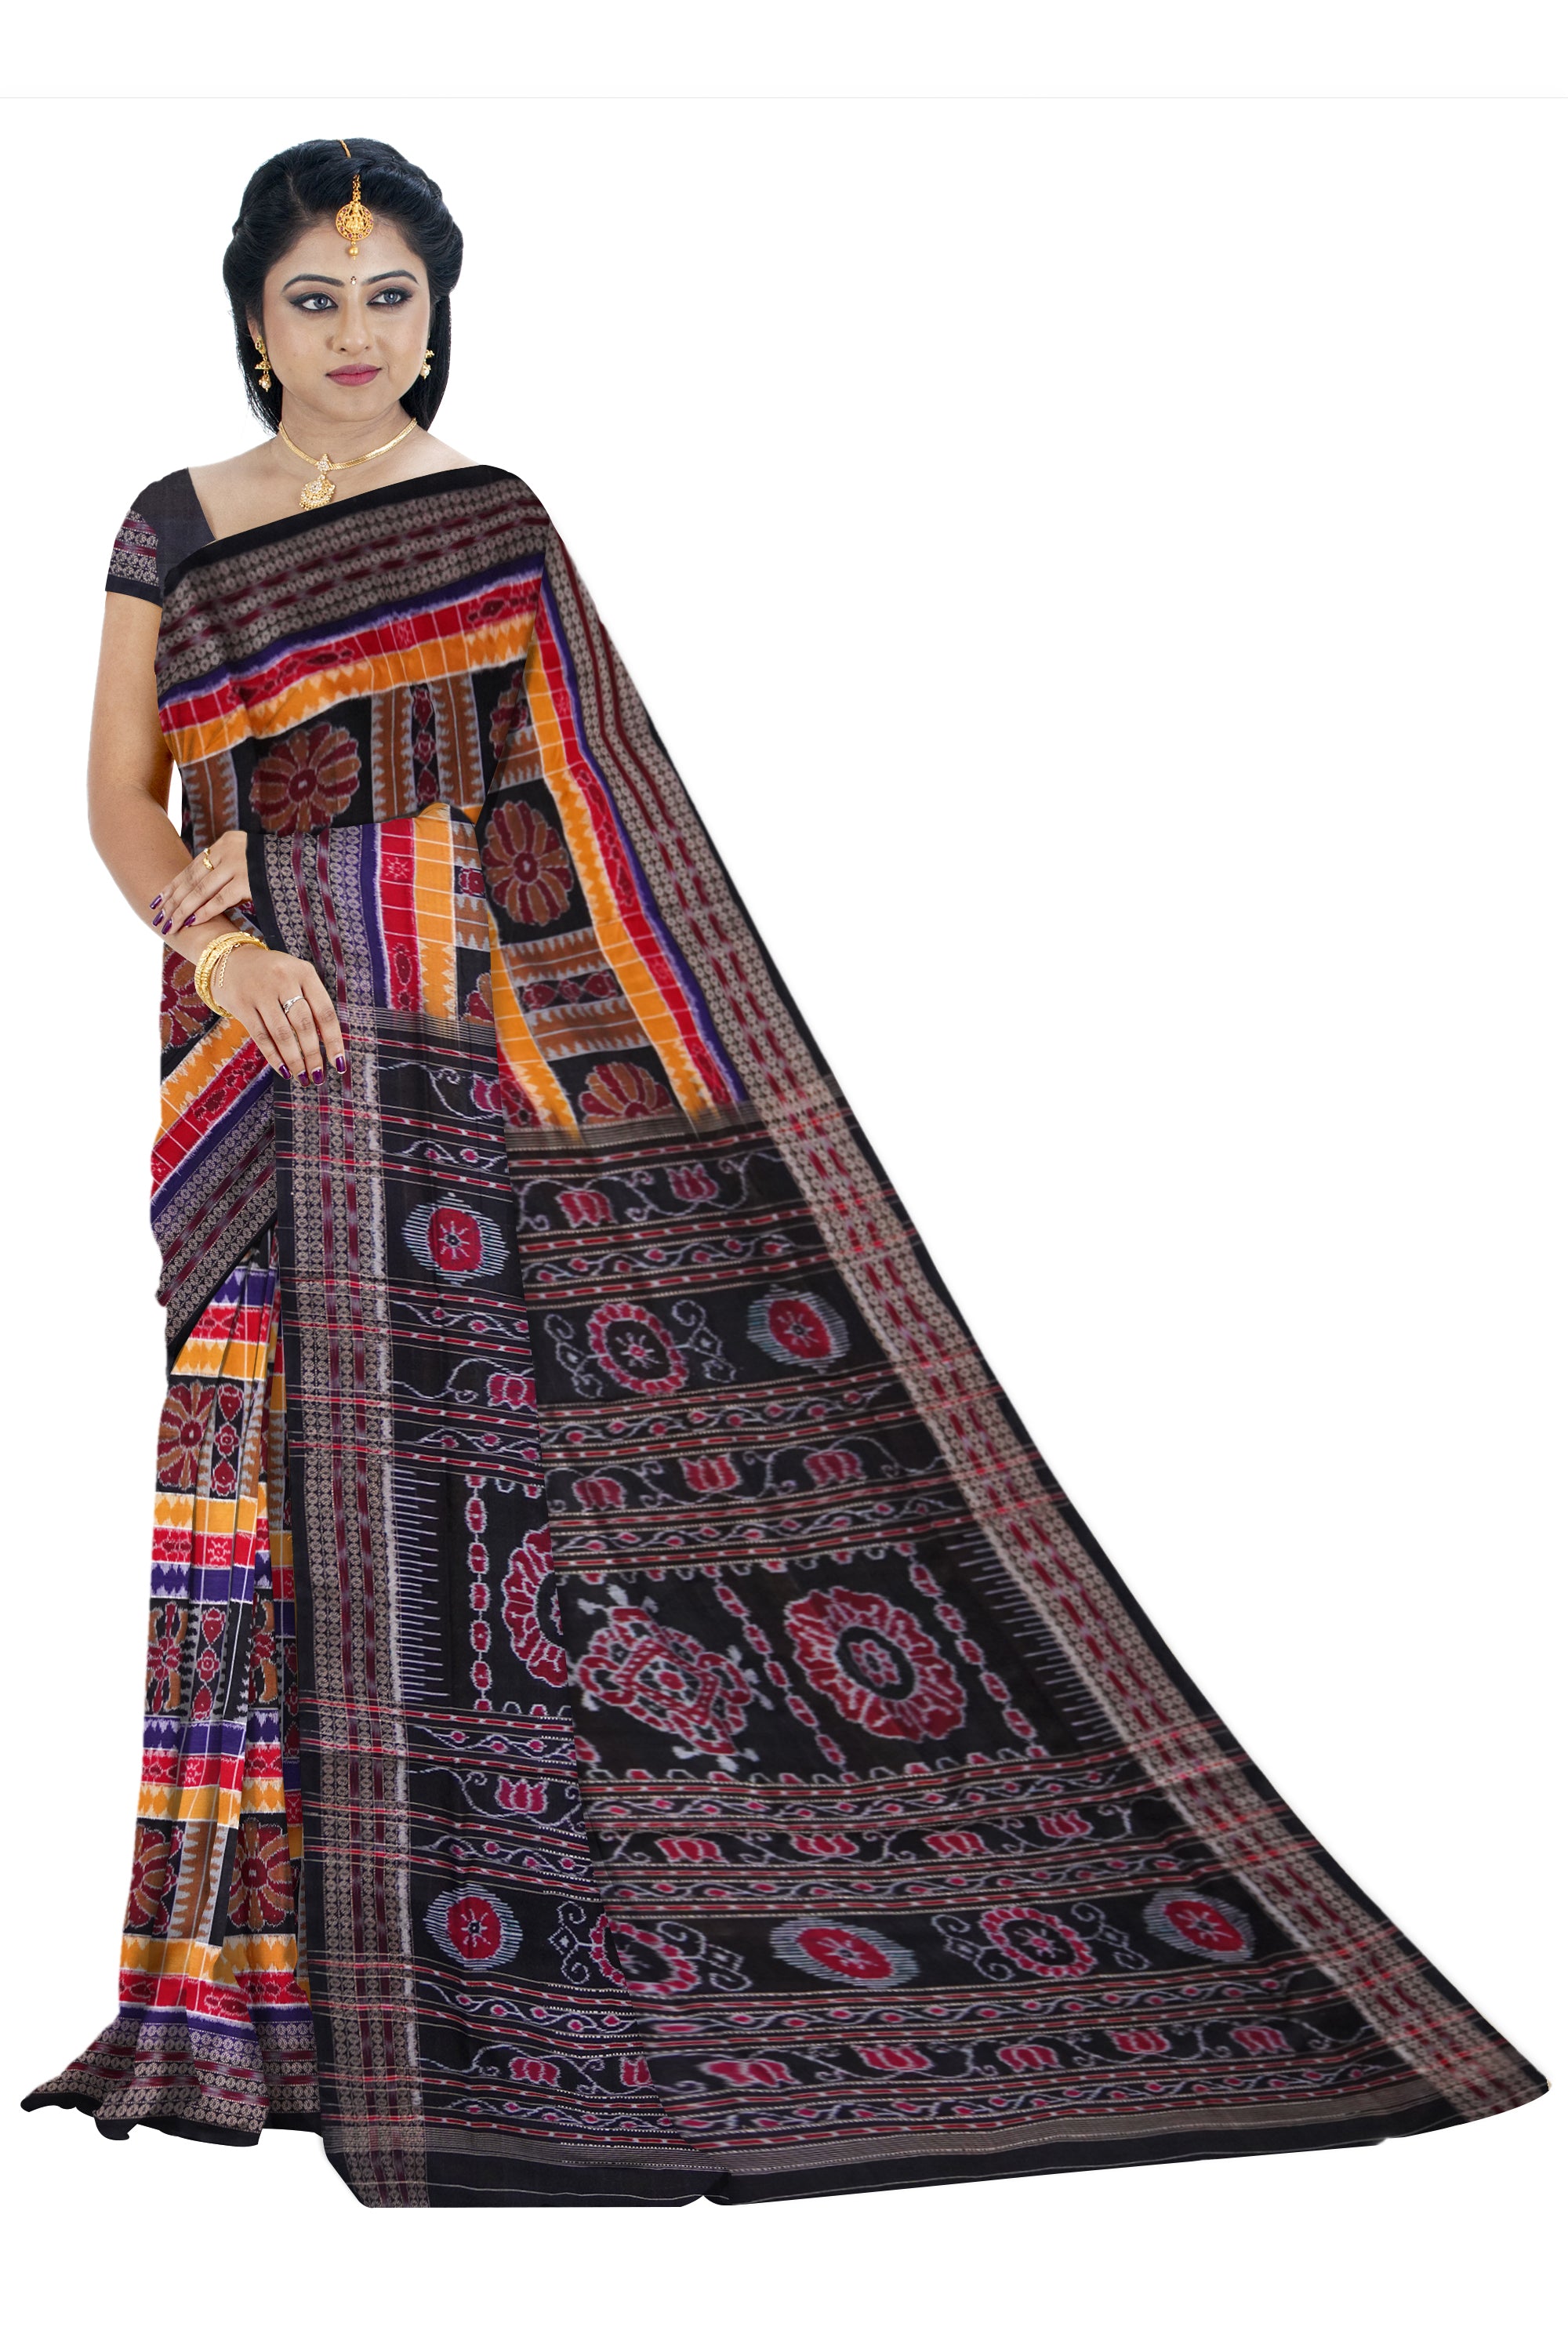 Uttkala laxmi pure sambalpuri cotton saree in 3D colour with black colour pallu. - Koshali Arts & Crafts Enterprise